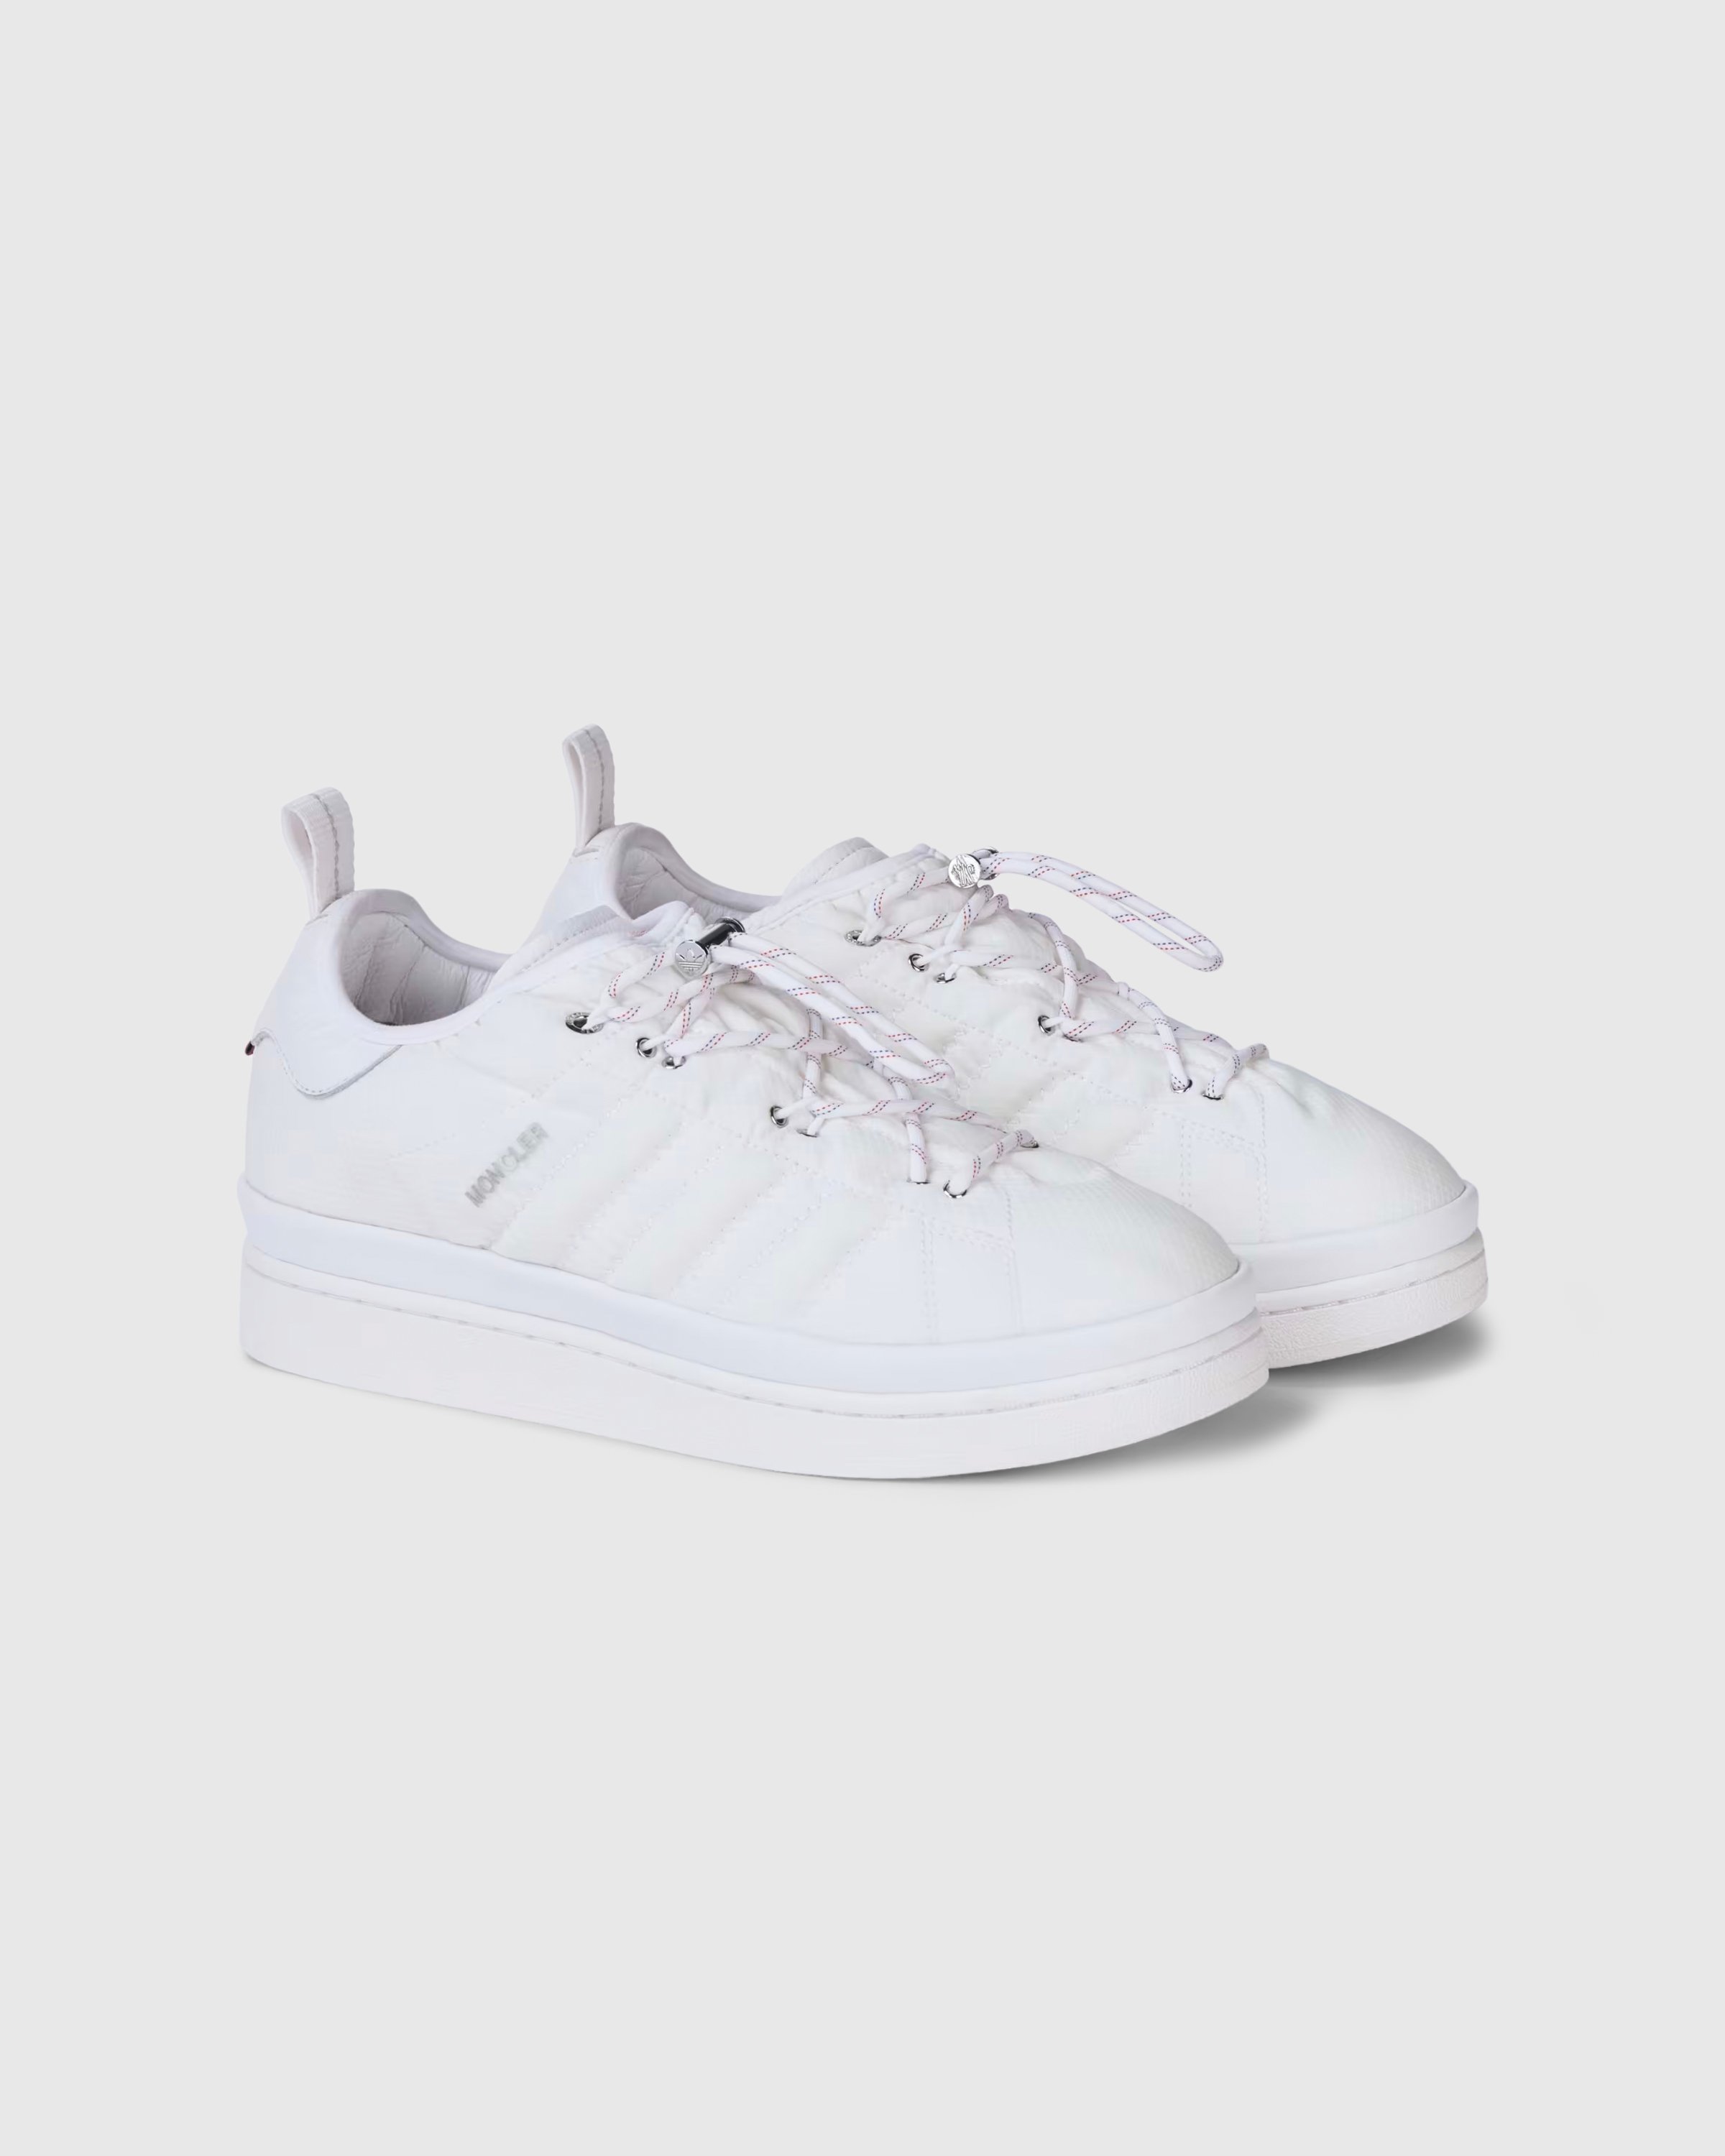 Moncler x adidas Originals - Campus Low Top Sneakers - Footwear - White - Image 2